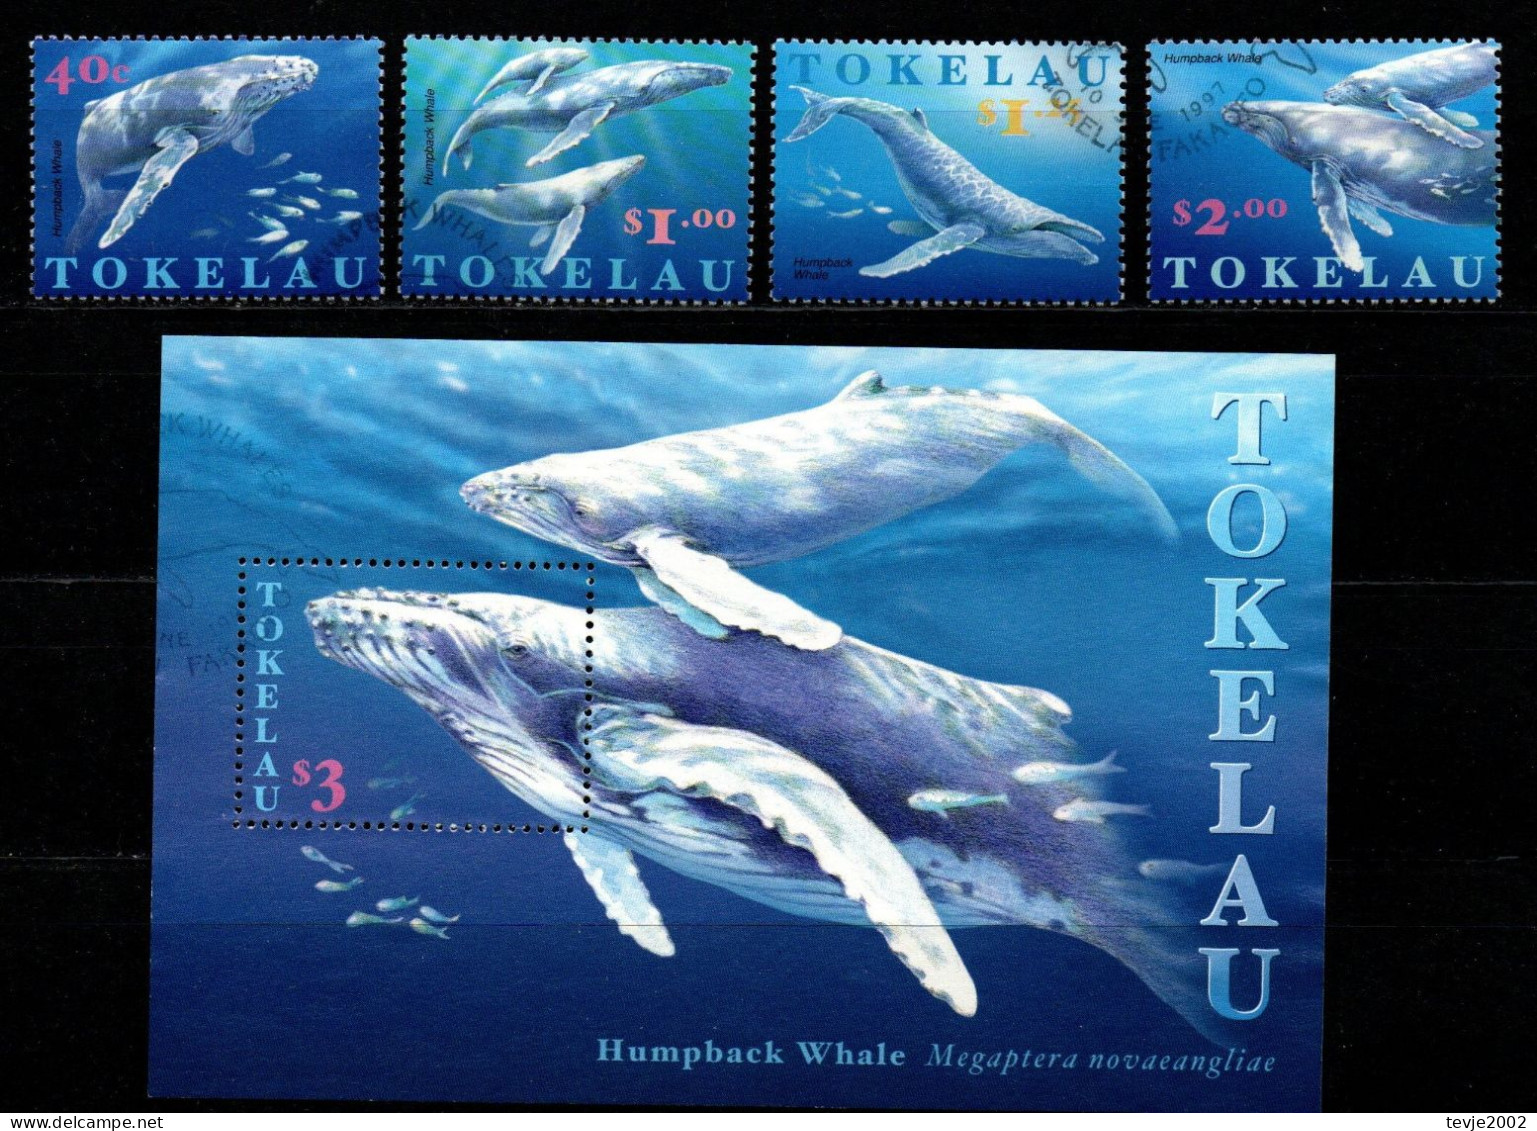 Tokelau 1997 - Mi.Nr. 224 - 247 + Block 11 - Gestempelt Used - Tiere Animals Wale Whales - Whales